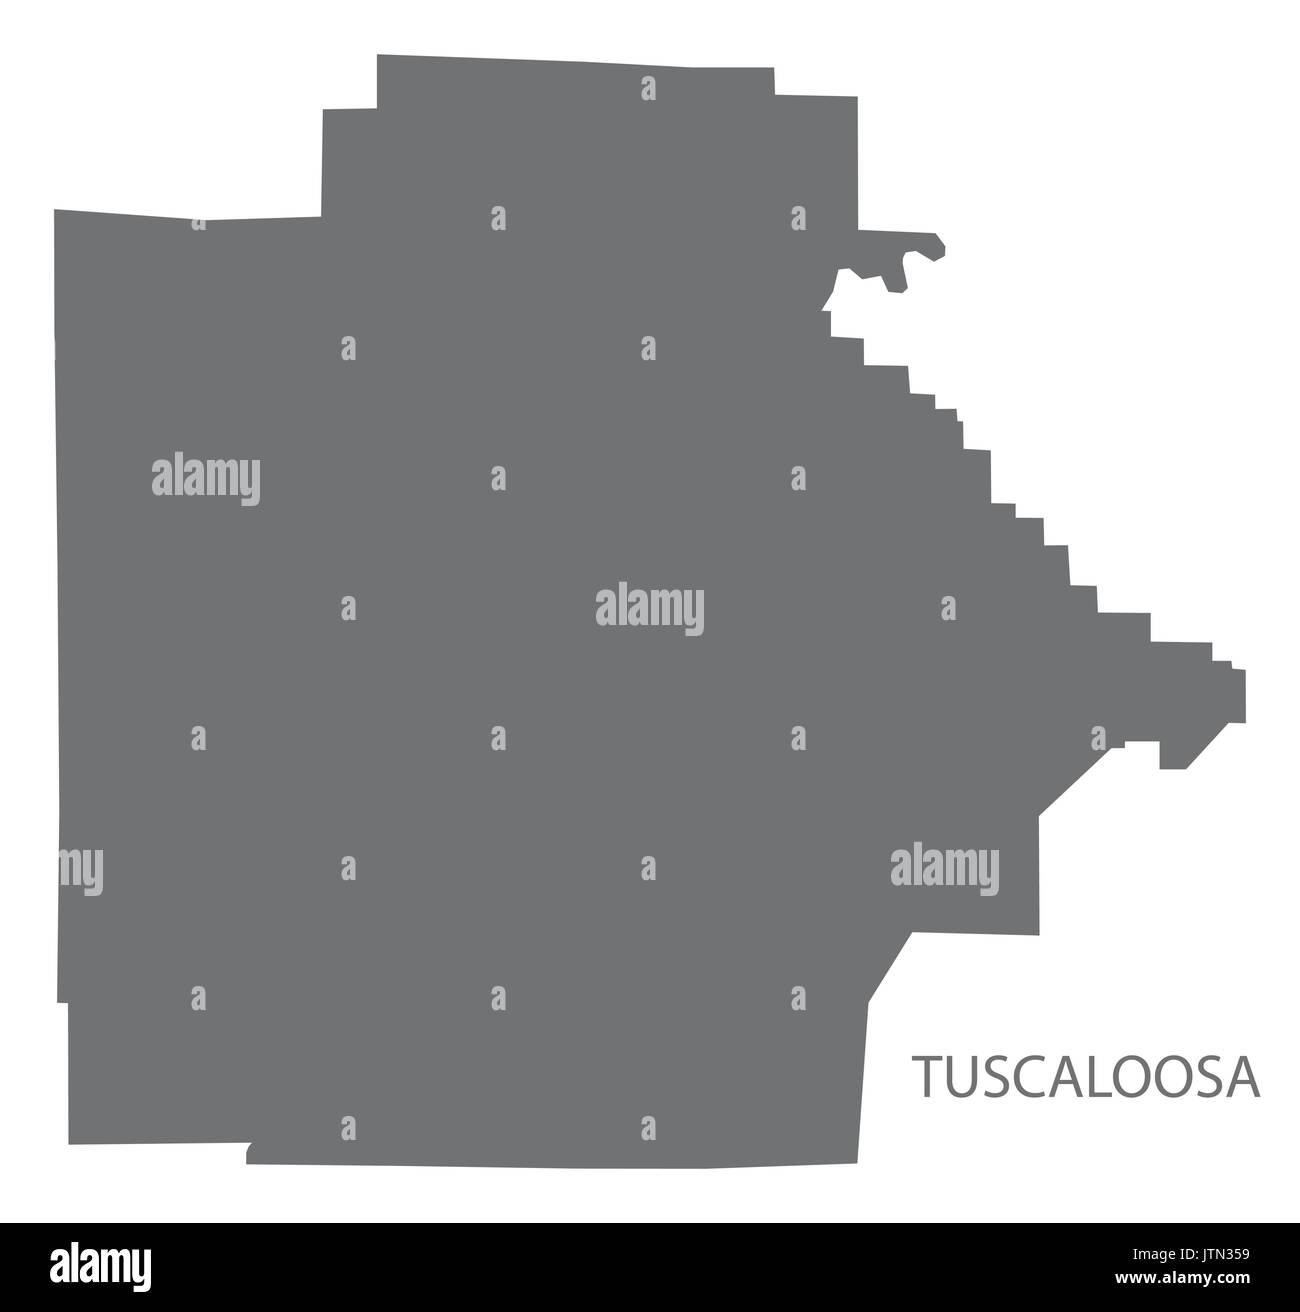 Tuscaloosa County Karte von Alabama USA Grau Abbildung Silhouette Stock Vektor